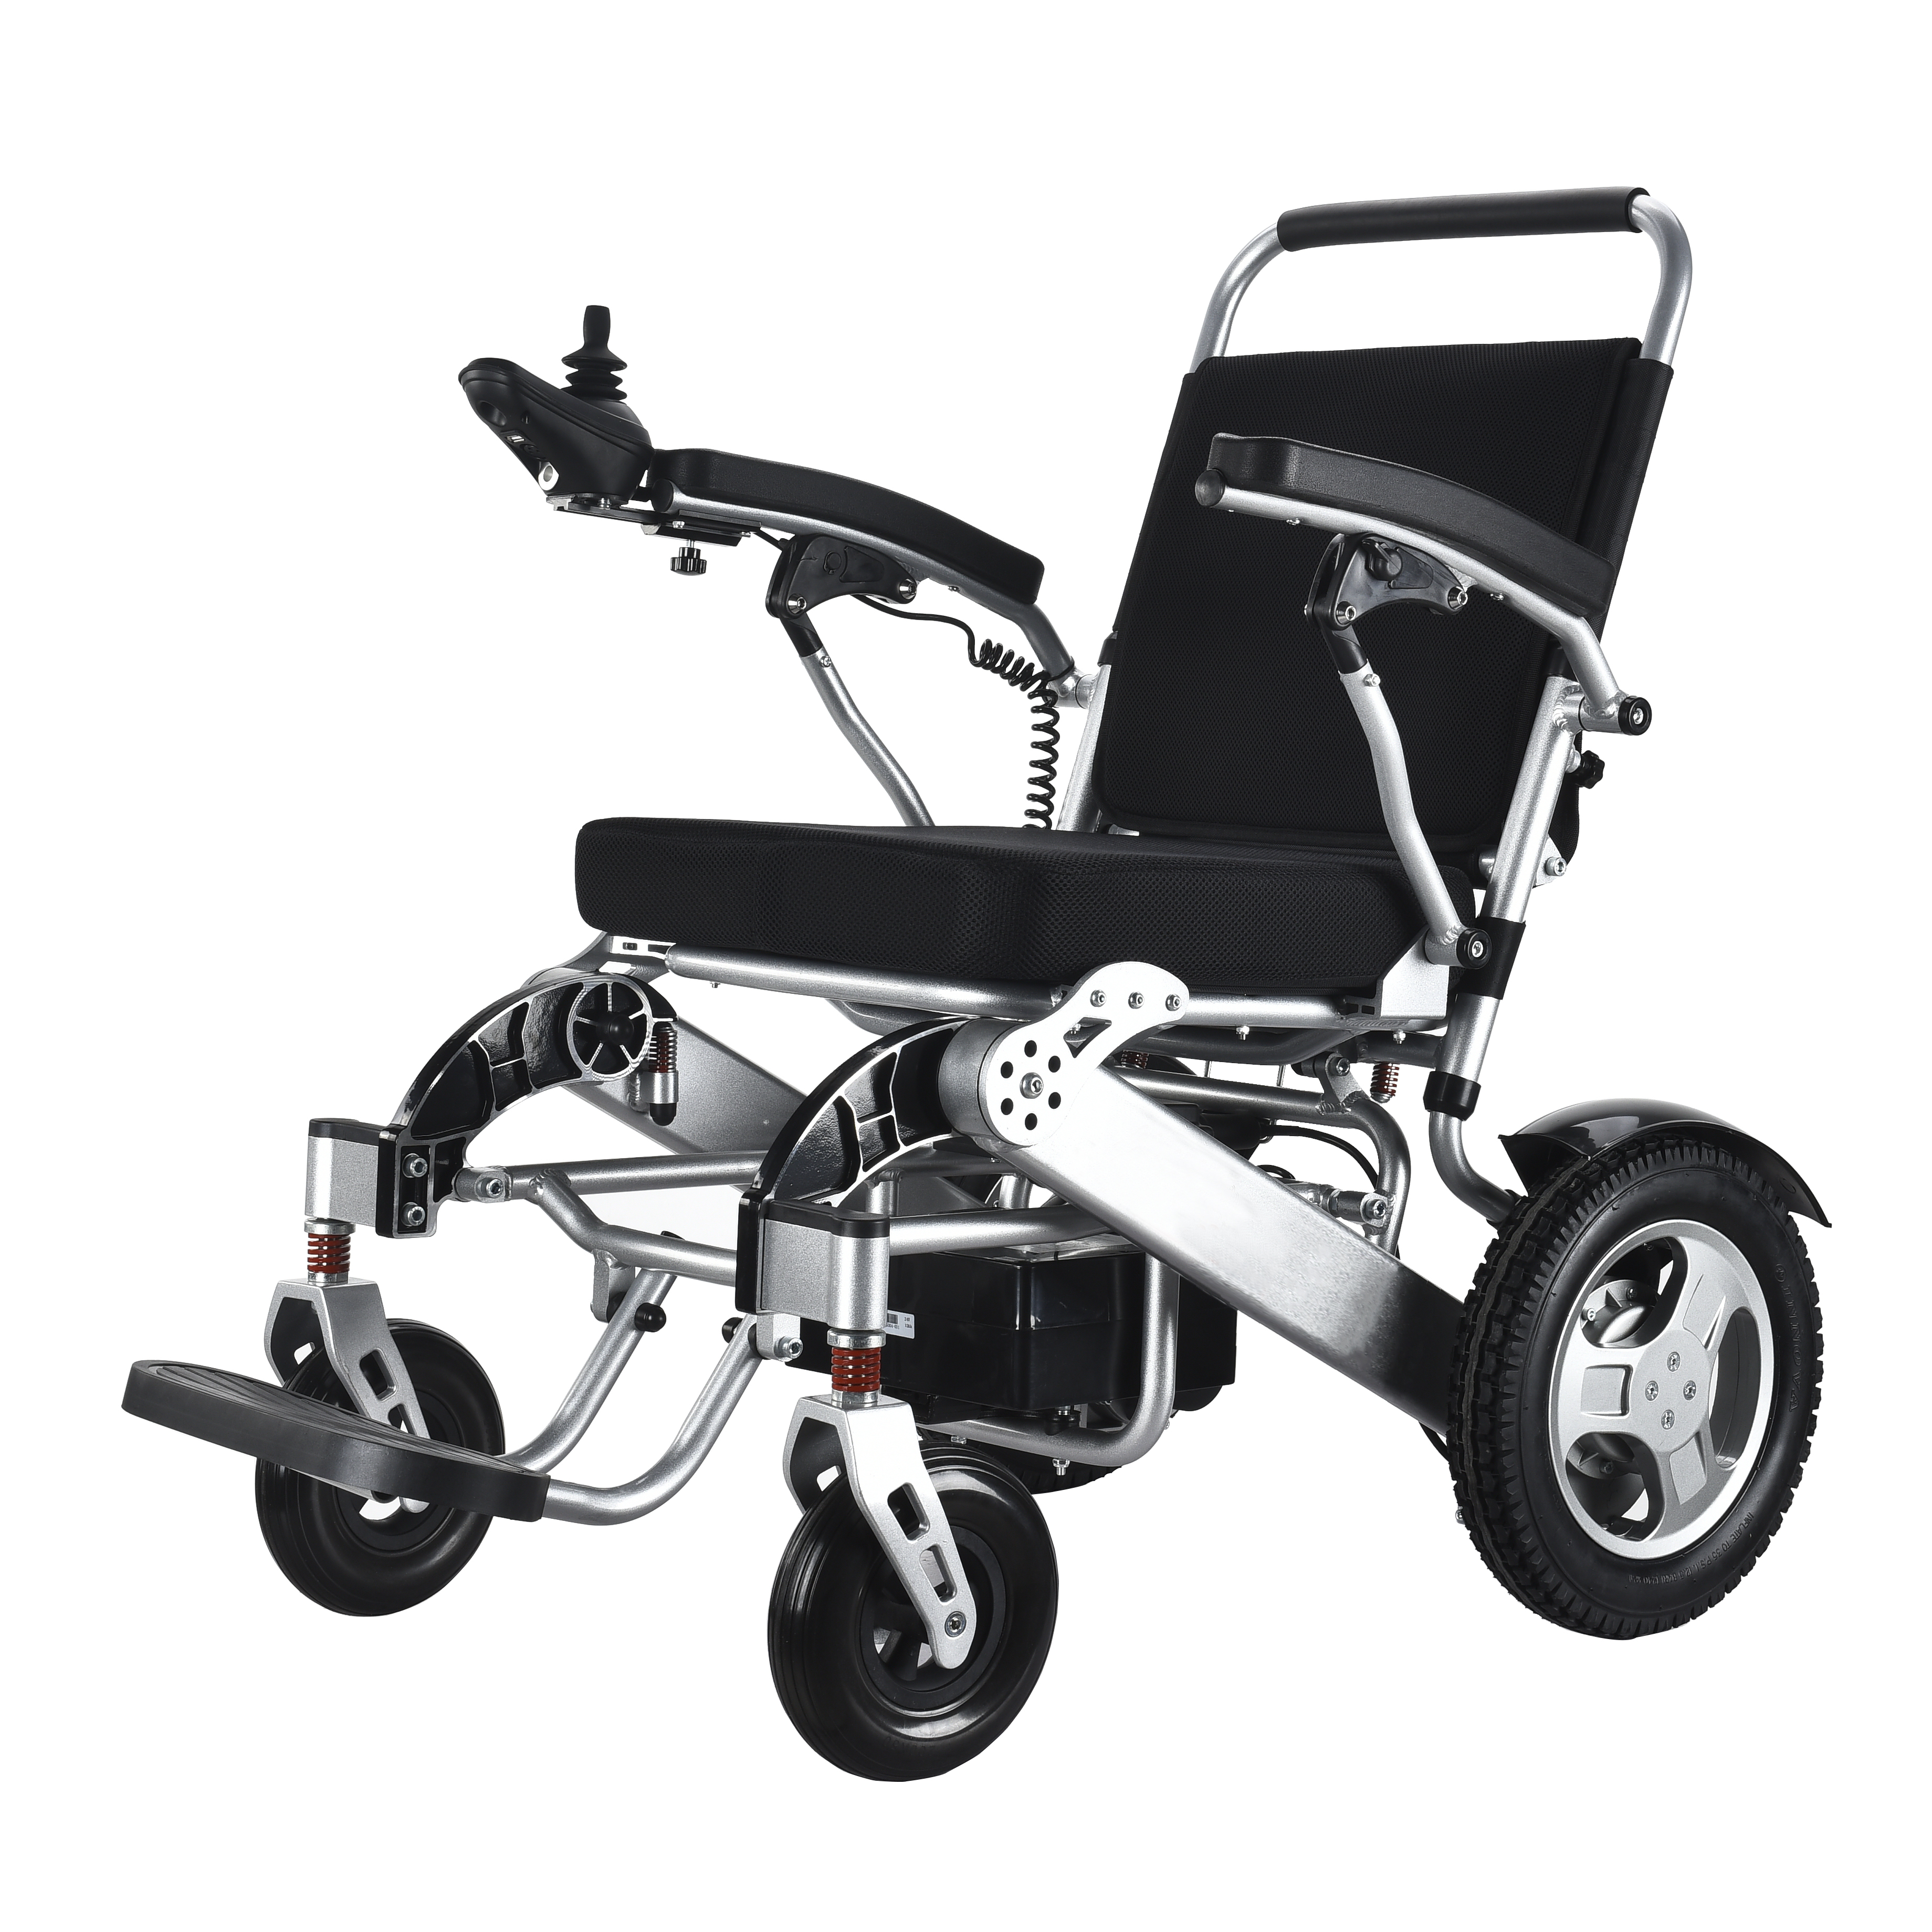 WISGING Folding Electric Powered Wheelchair Lightweight Portable